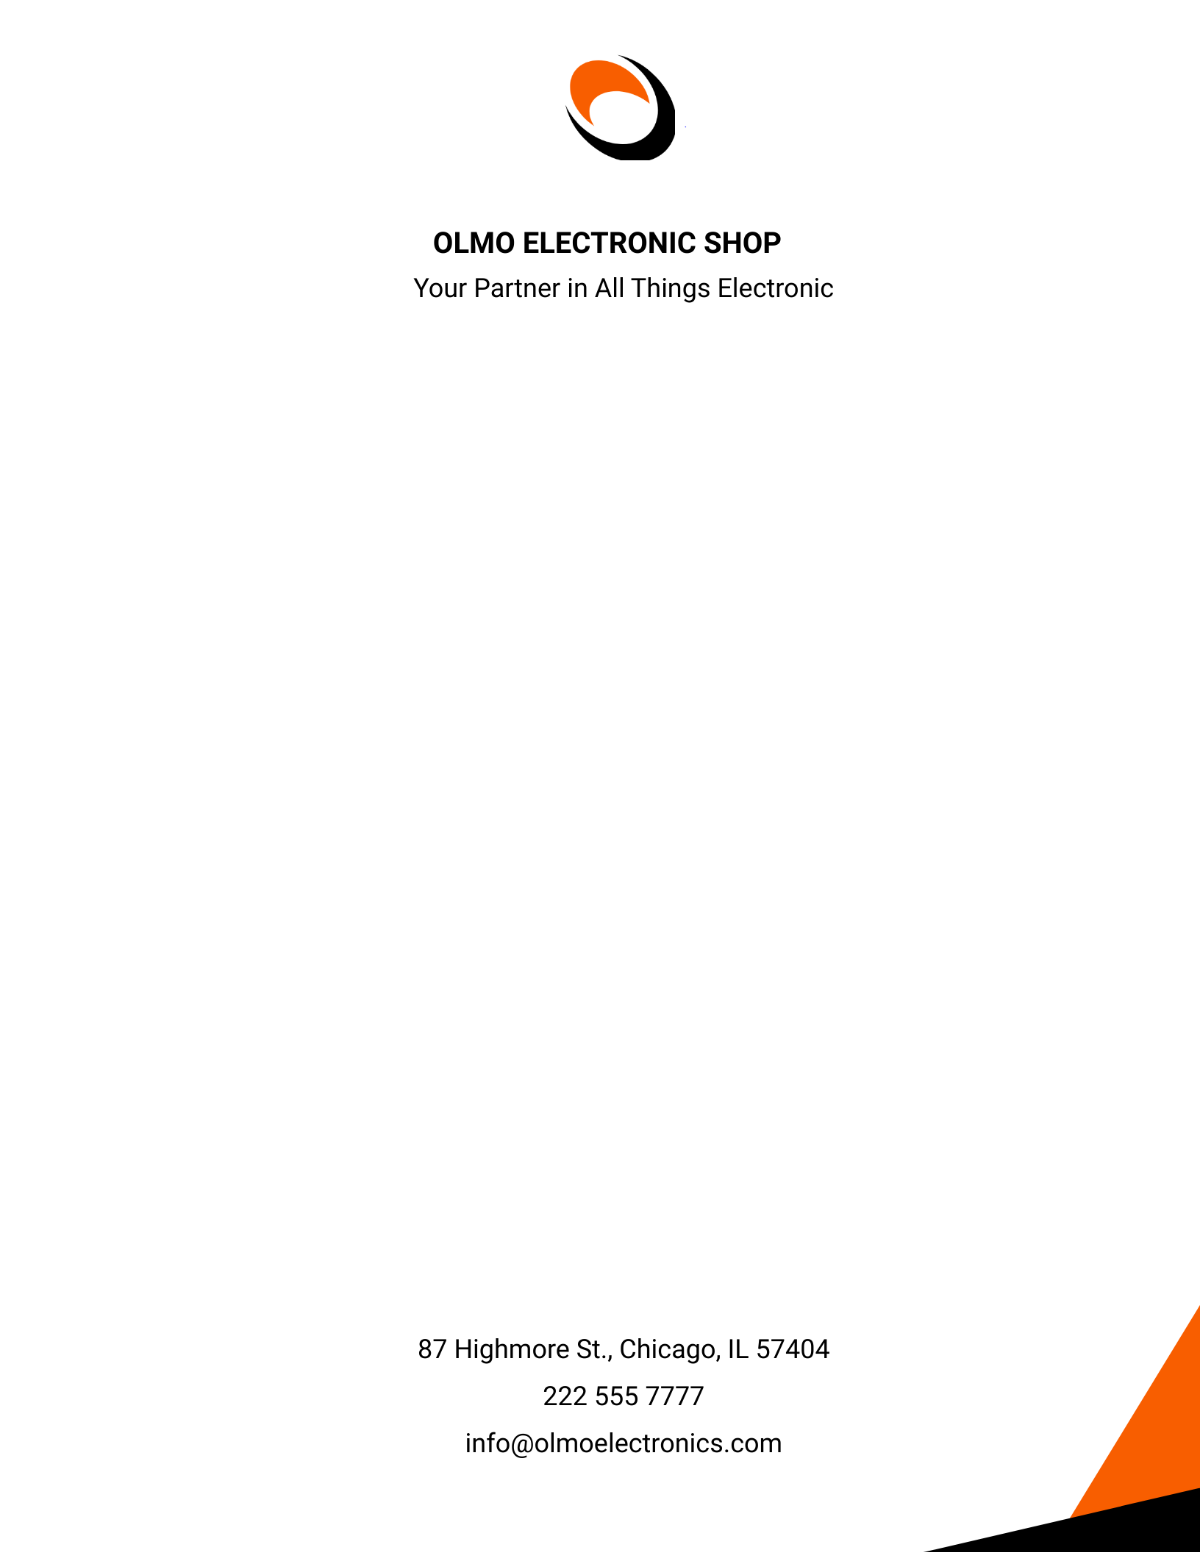 Electronic Shop Letterhead